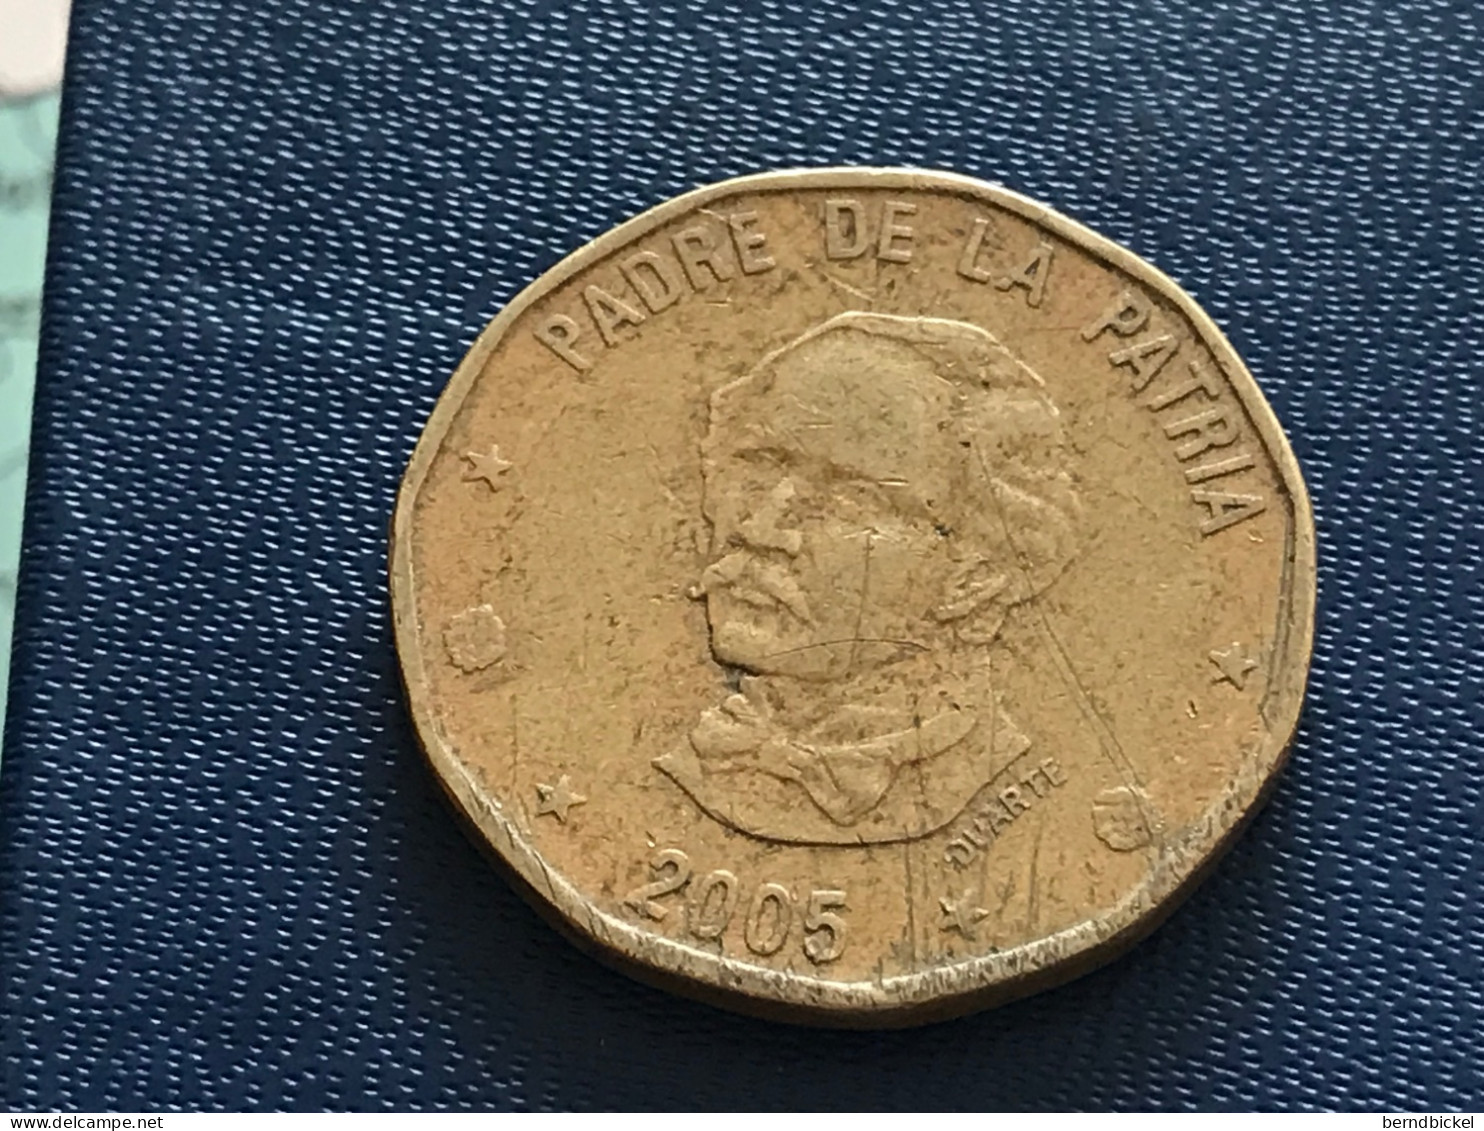 Münze Münzen Umlaufmünze Dominikanische Republik 1 Peso 2005 - Dominicana